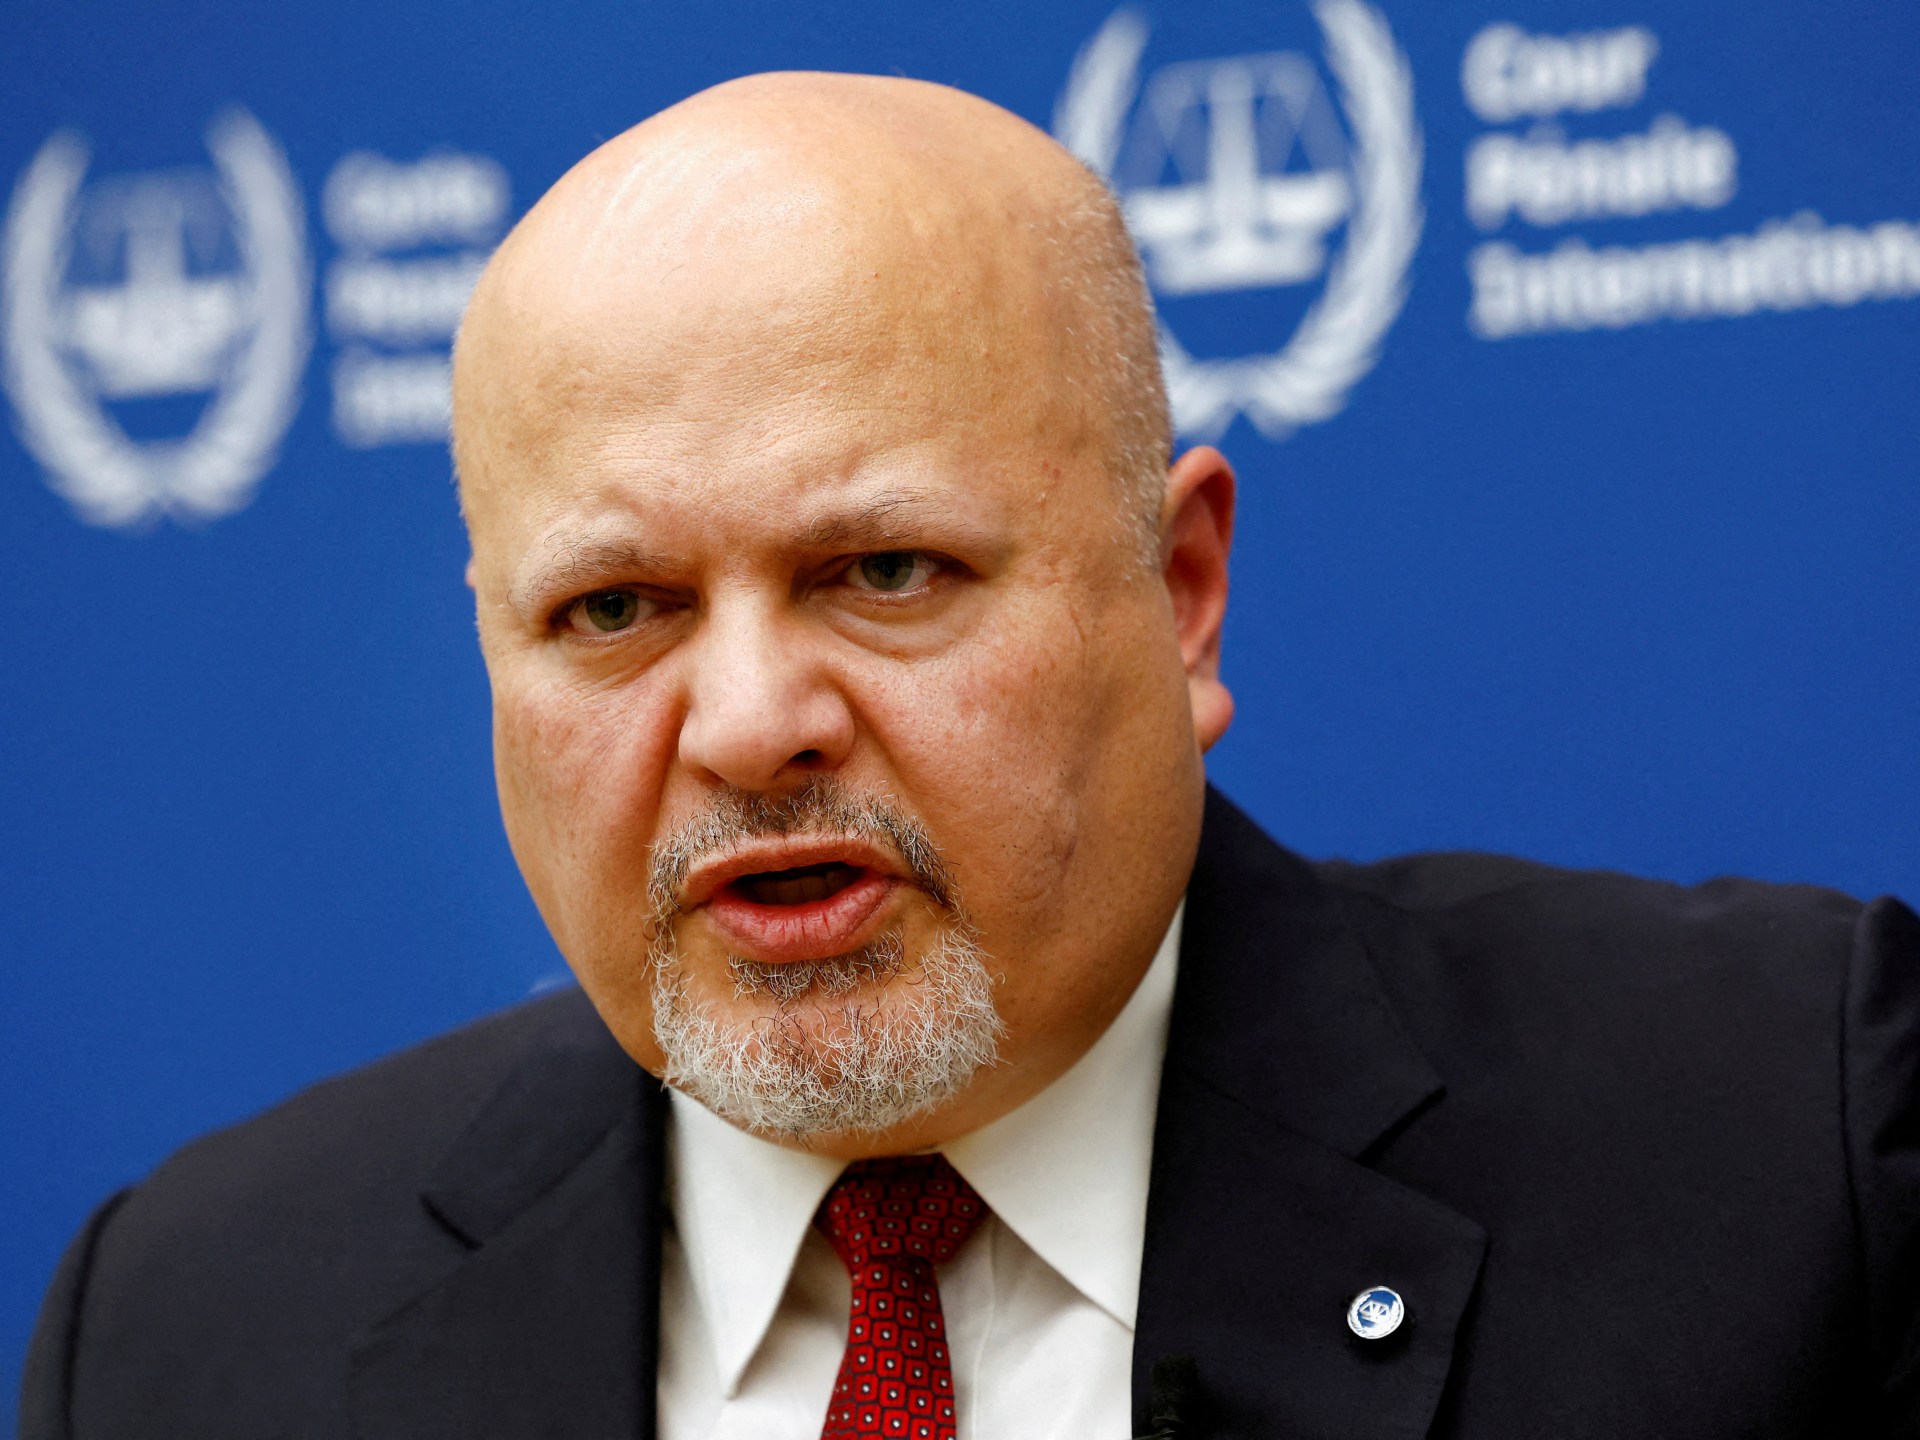 ICC demands end to threats against court amid Gaza war probe